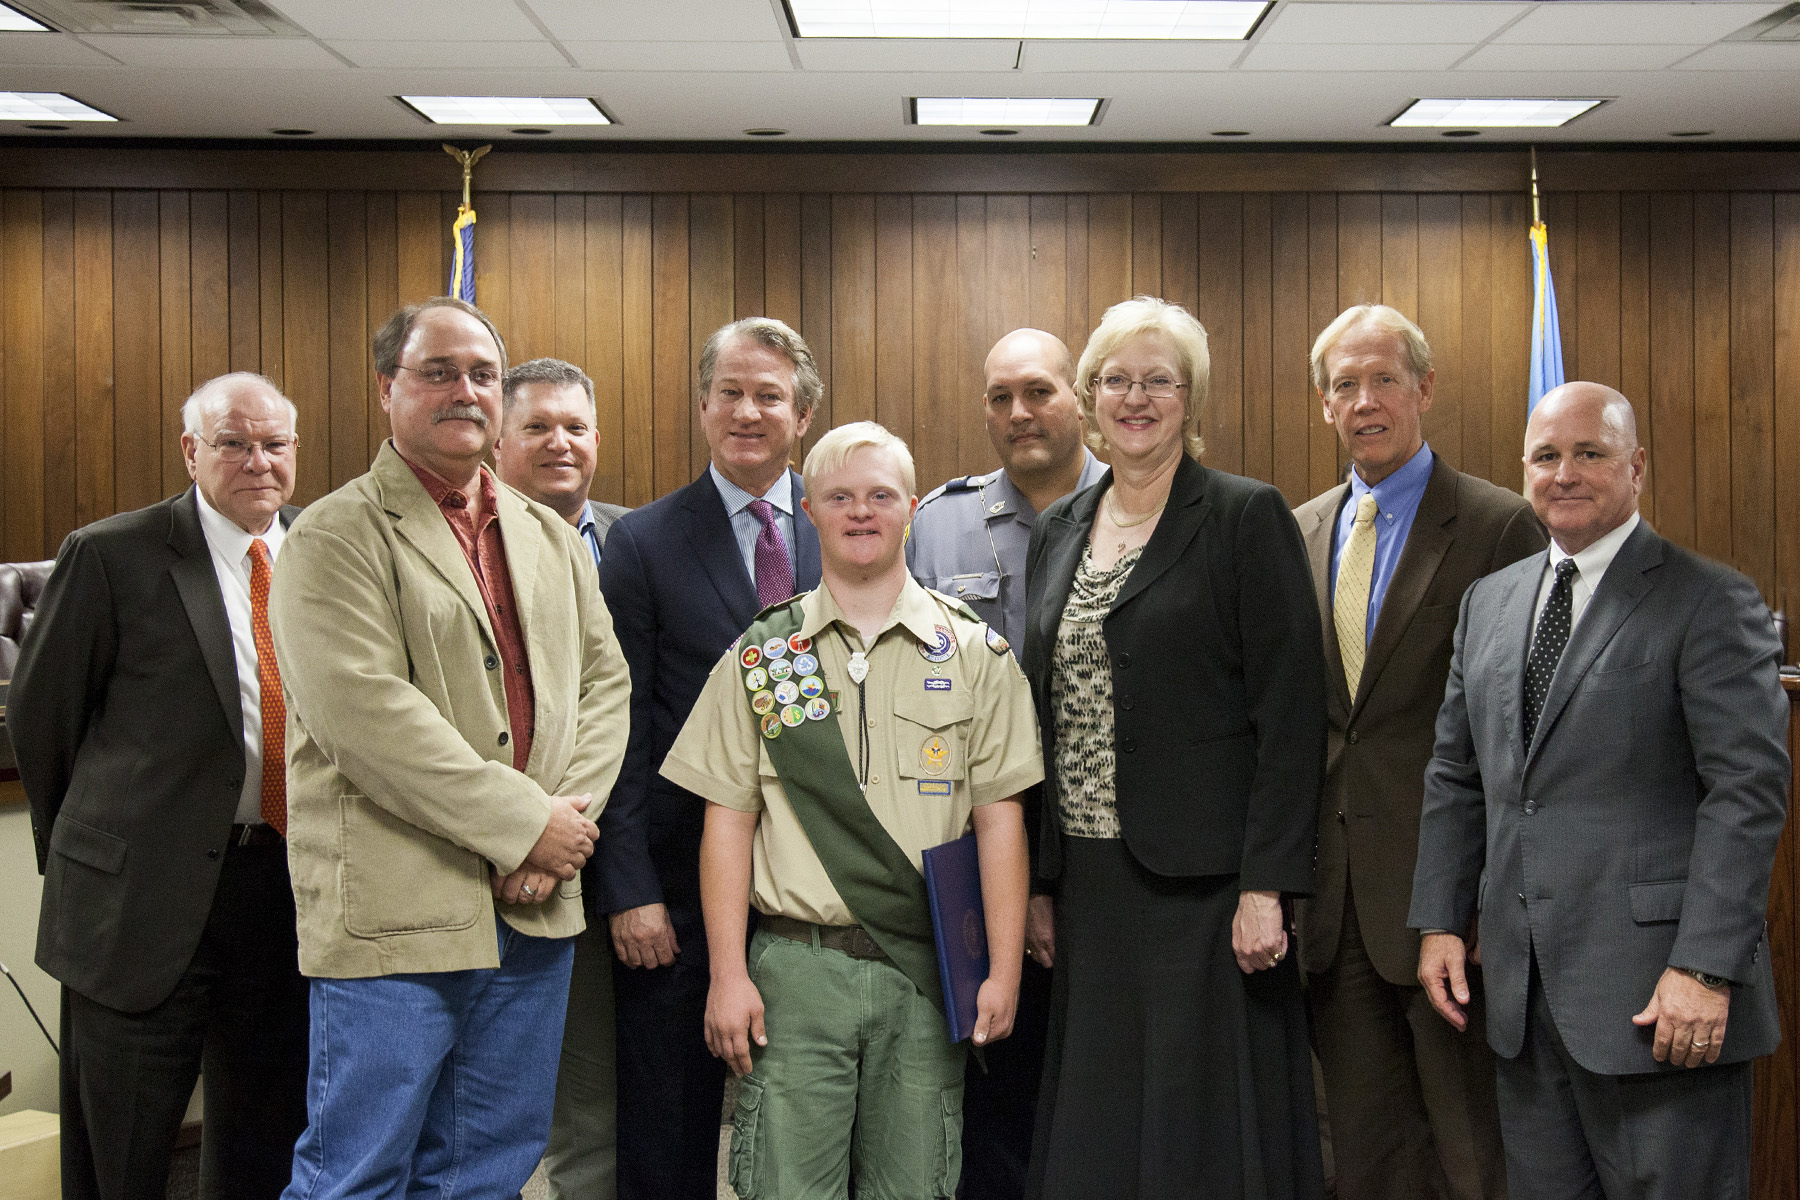 Transportation leaders honor Boy Scout